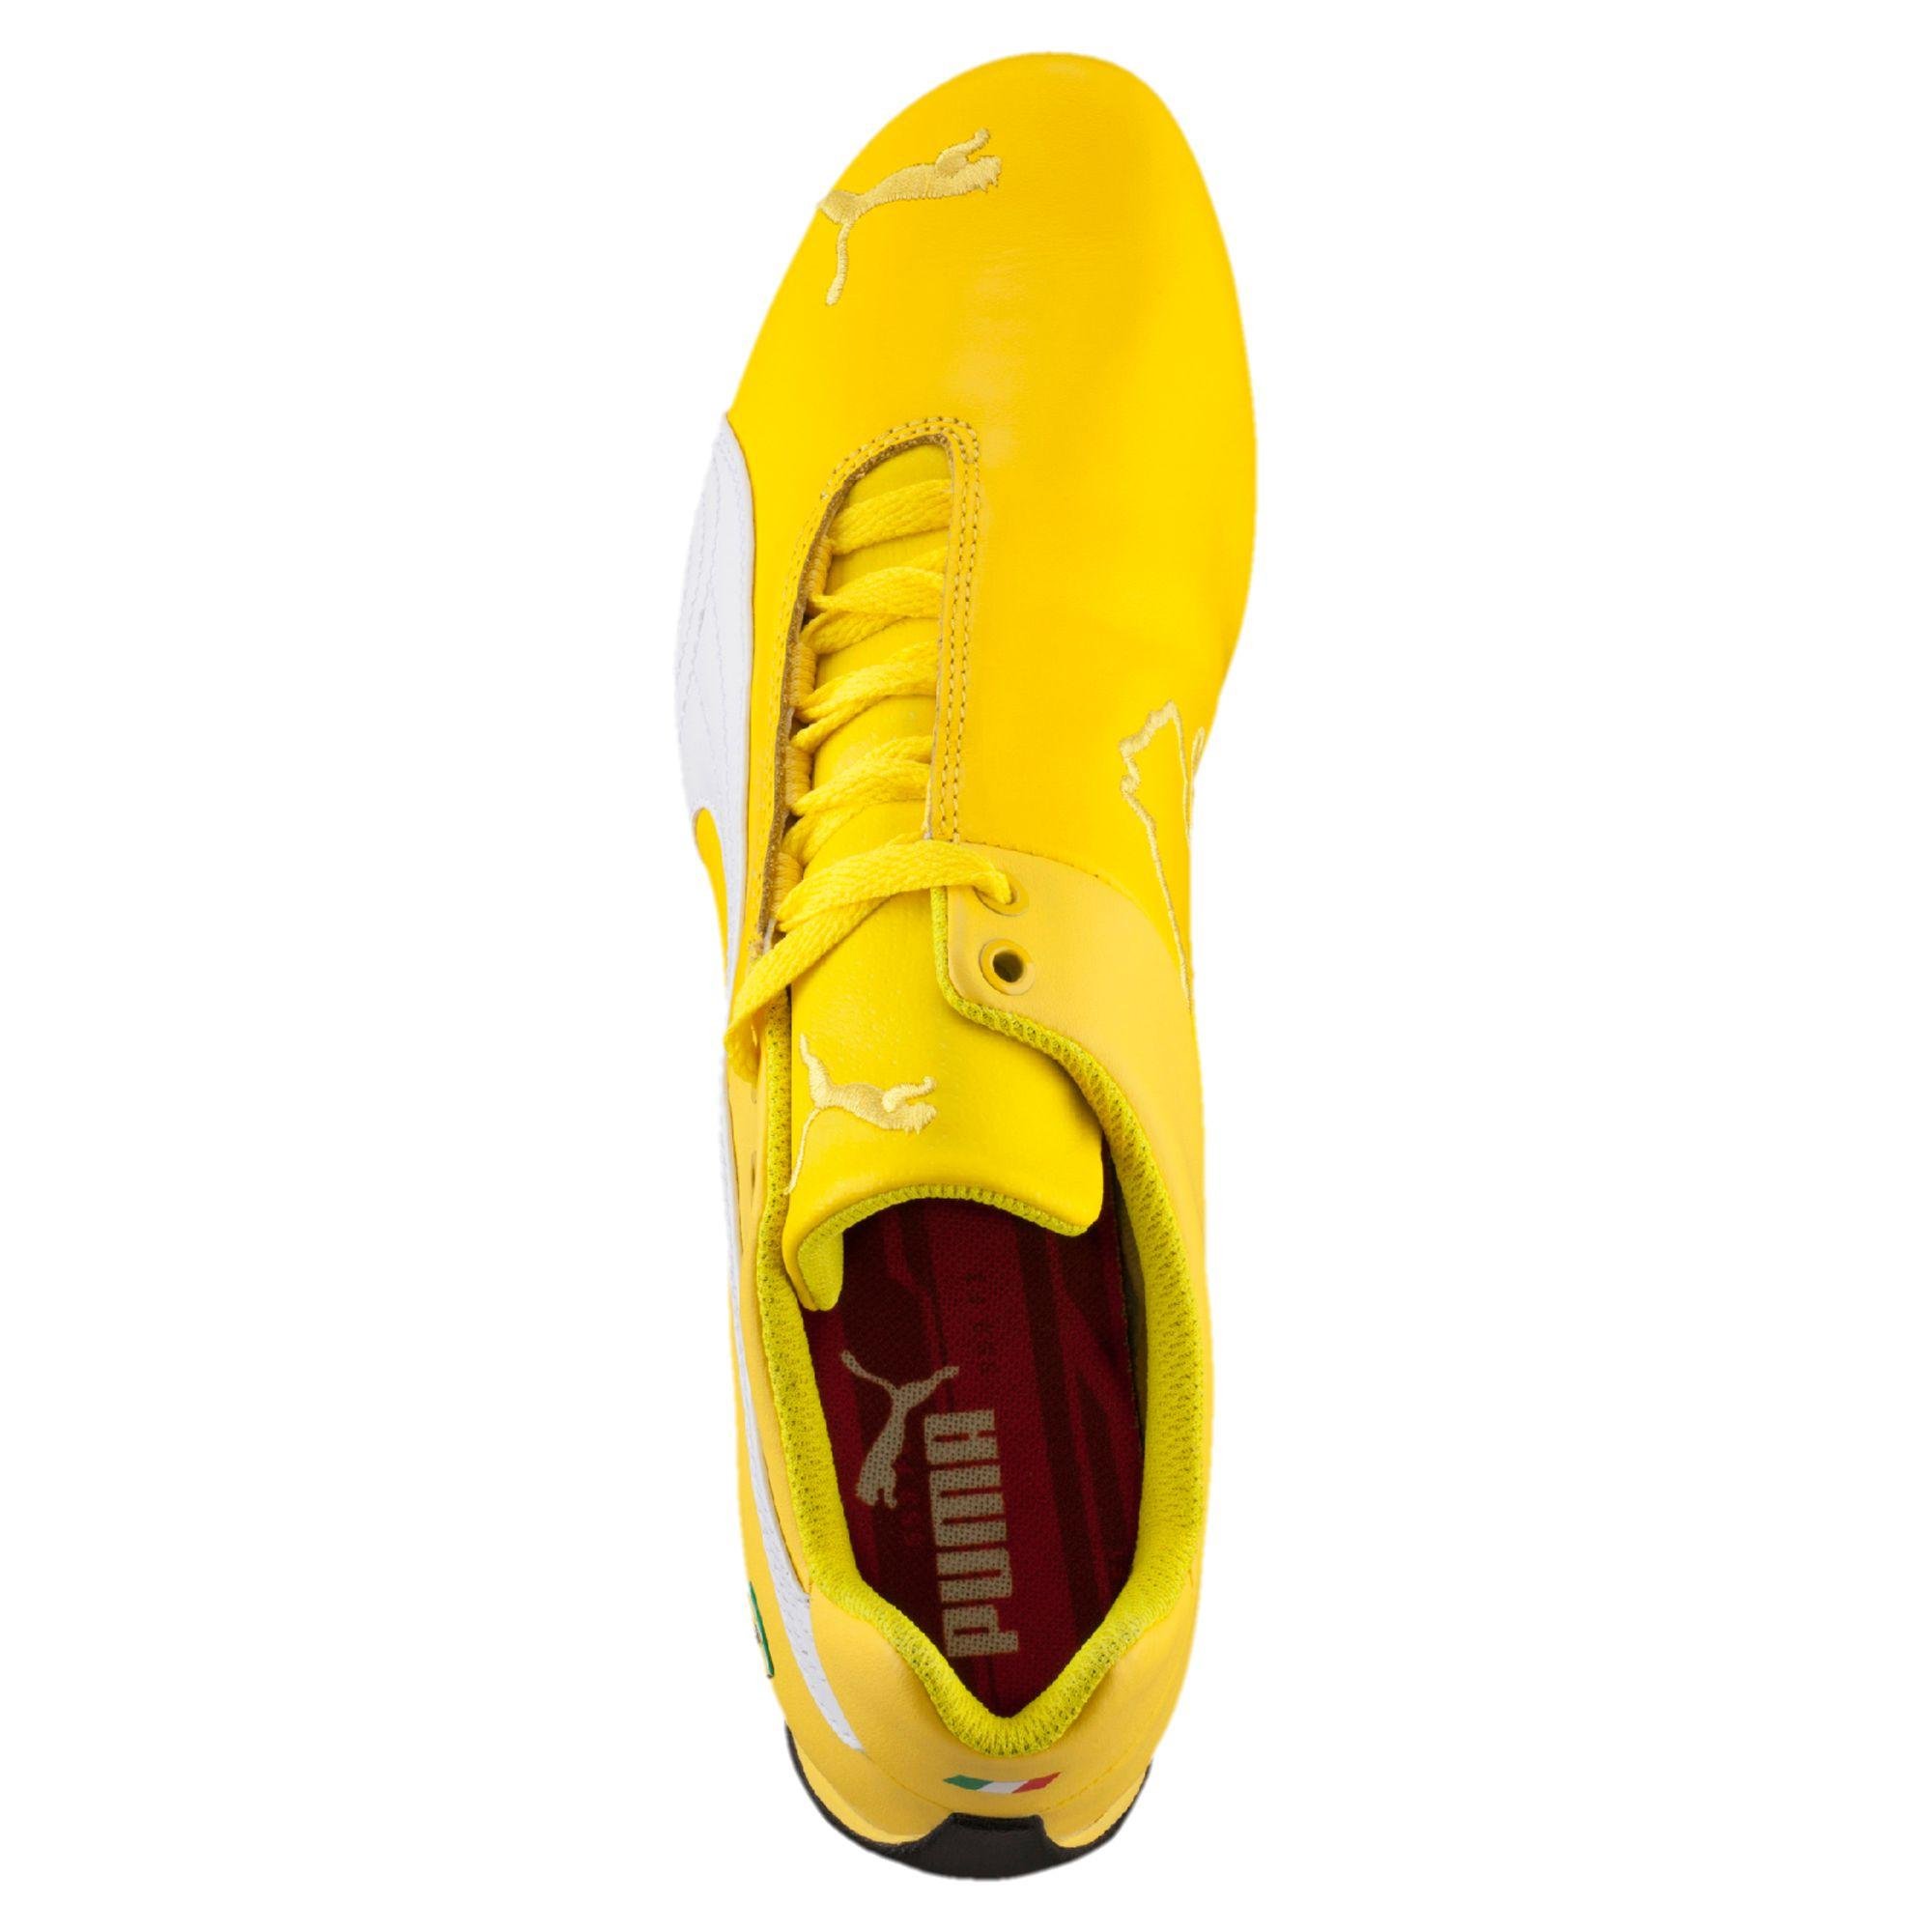 puma ferrari shoes for men yellow